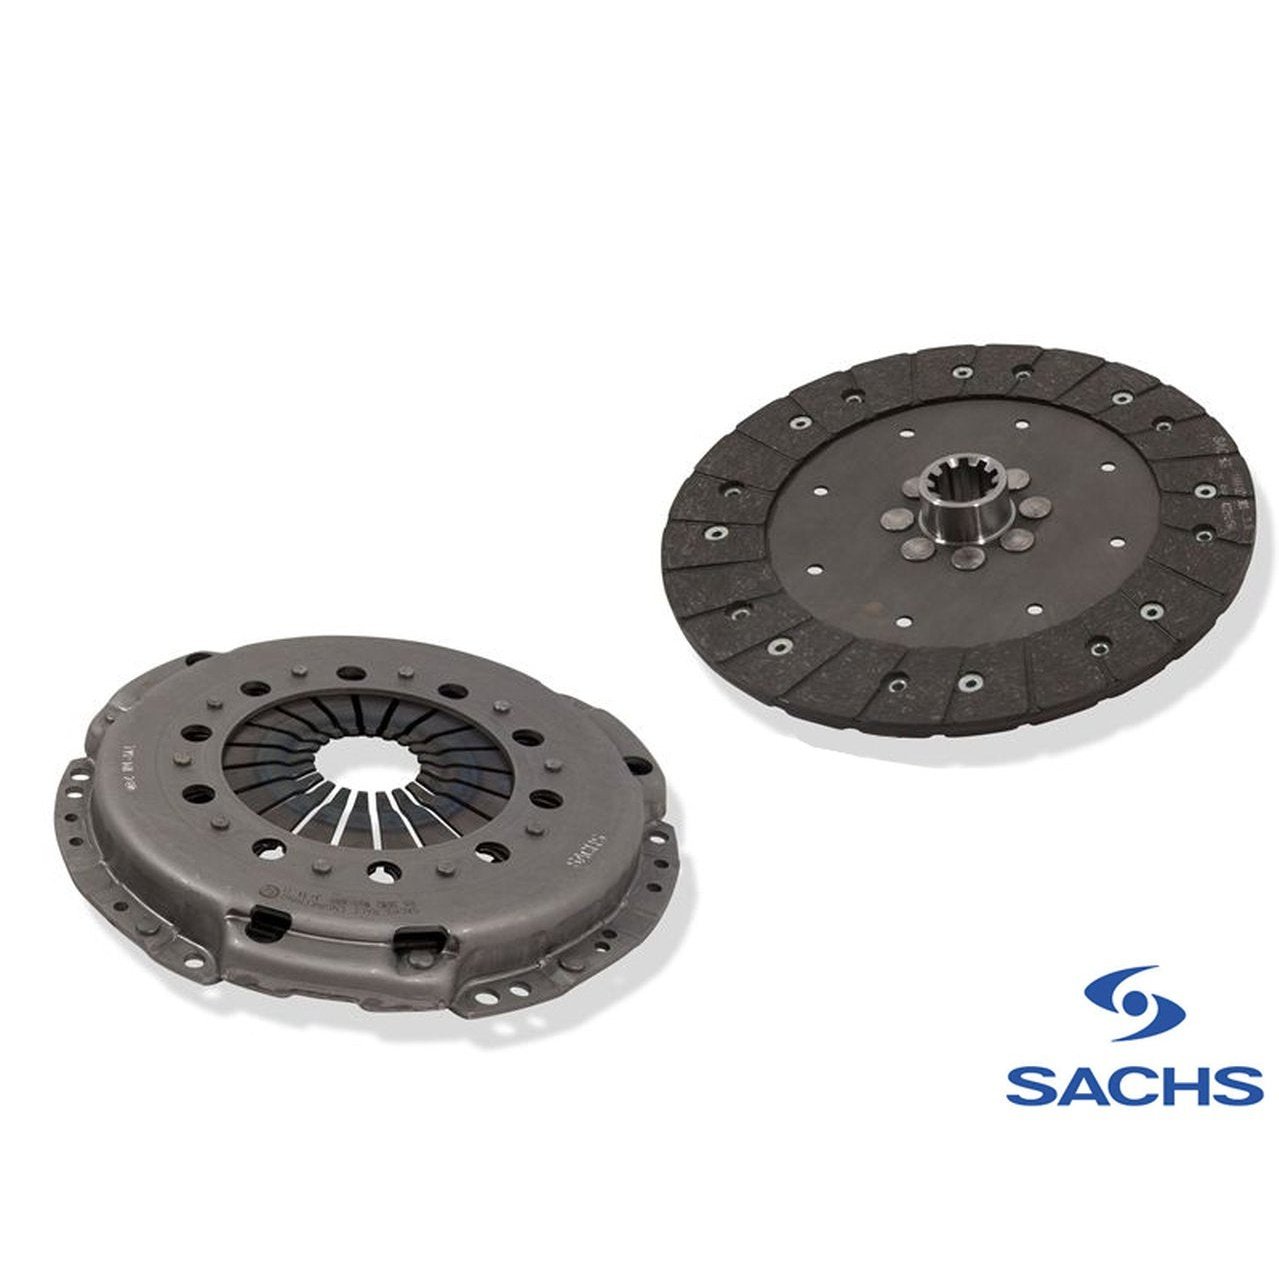 Sachs Performance Clutch Kit 